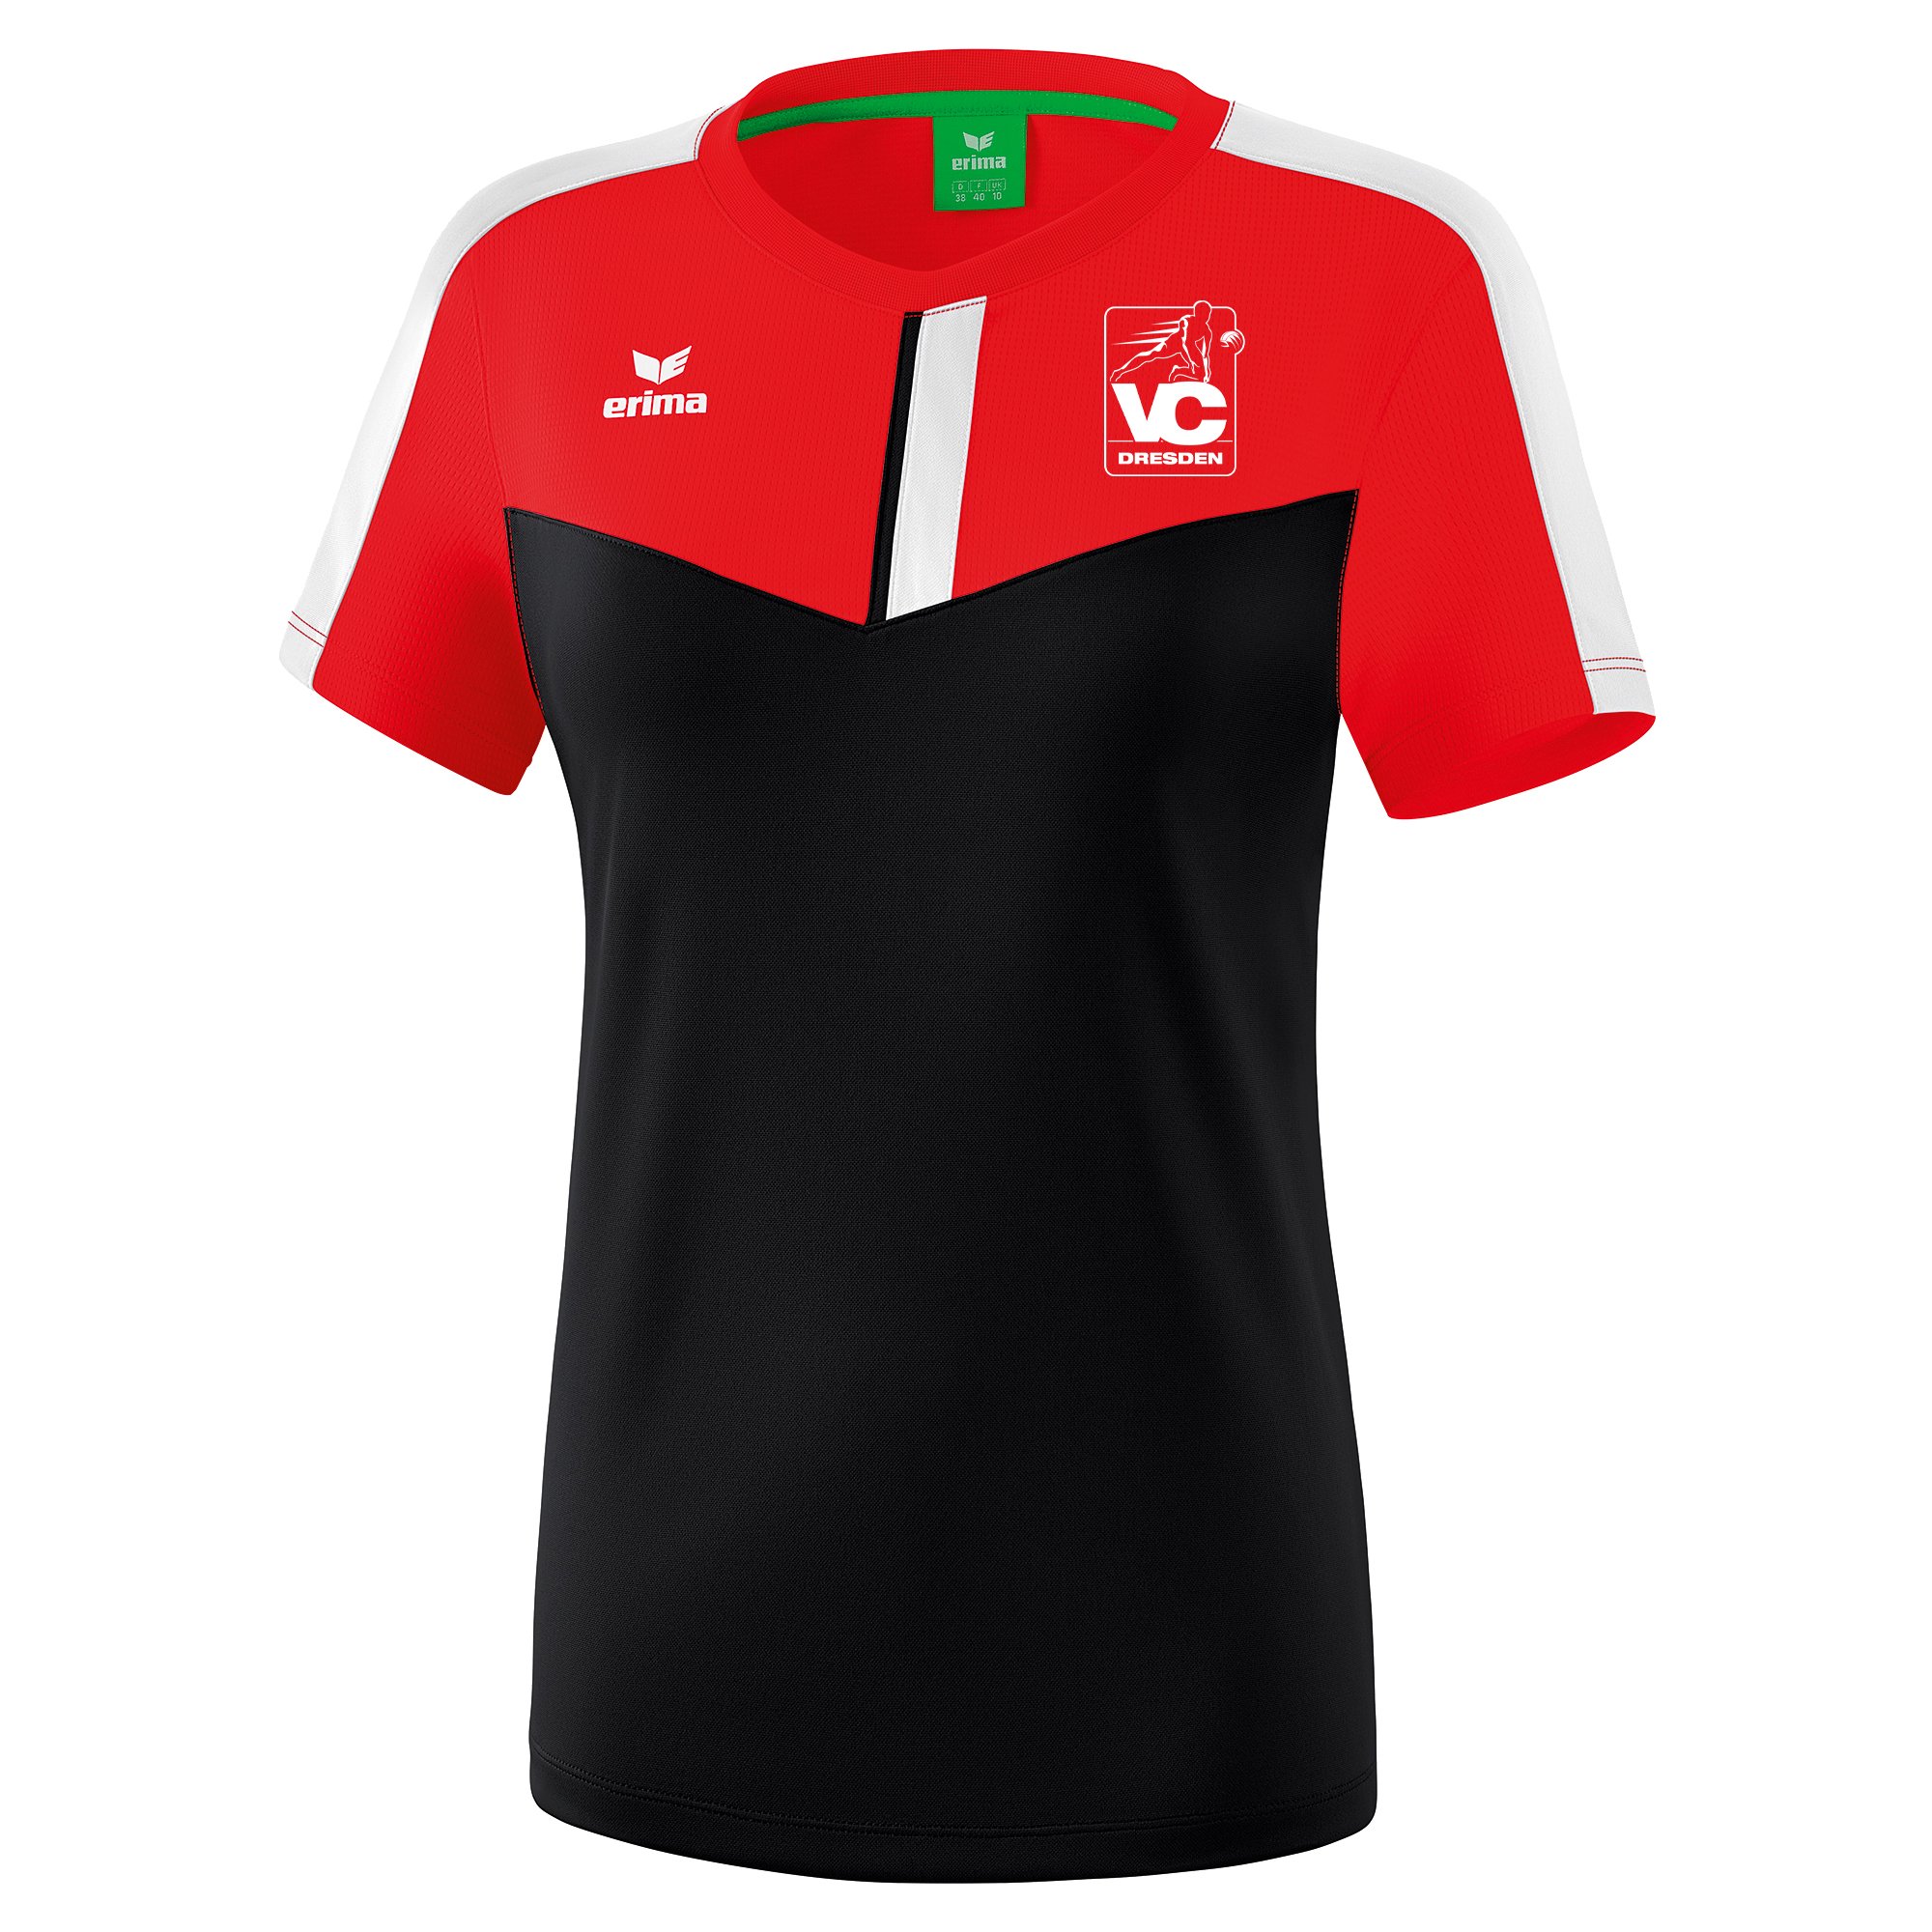 VC Dresden Squad T-Shirt Damen